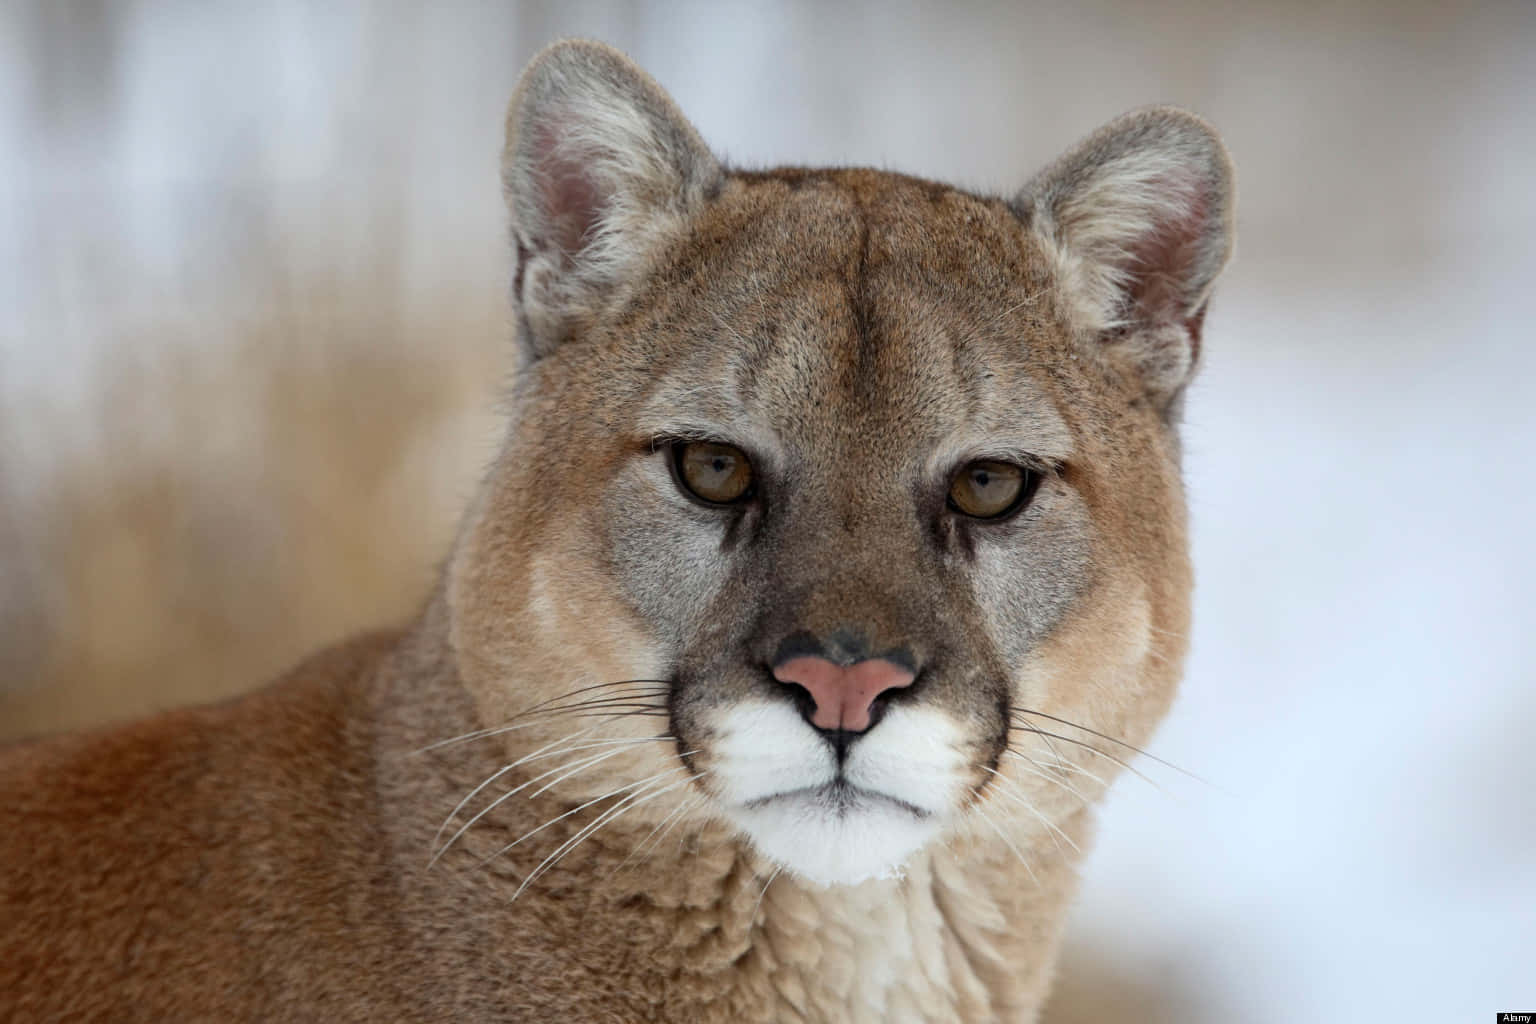 Majestic Cougar In Natural Habitat Background